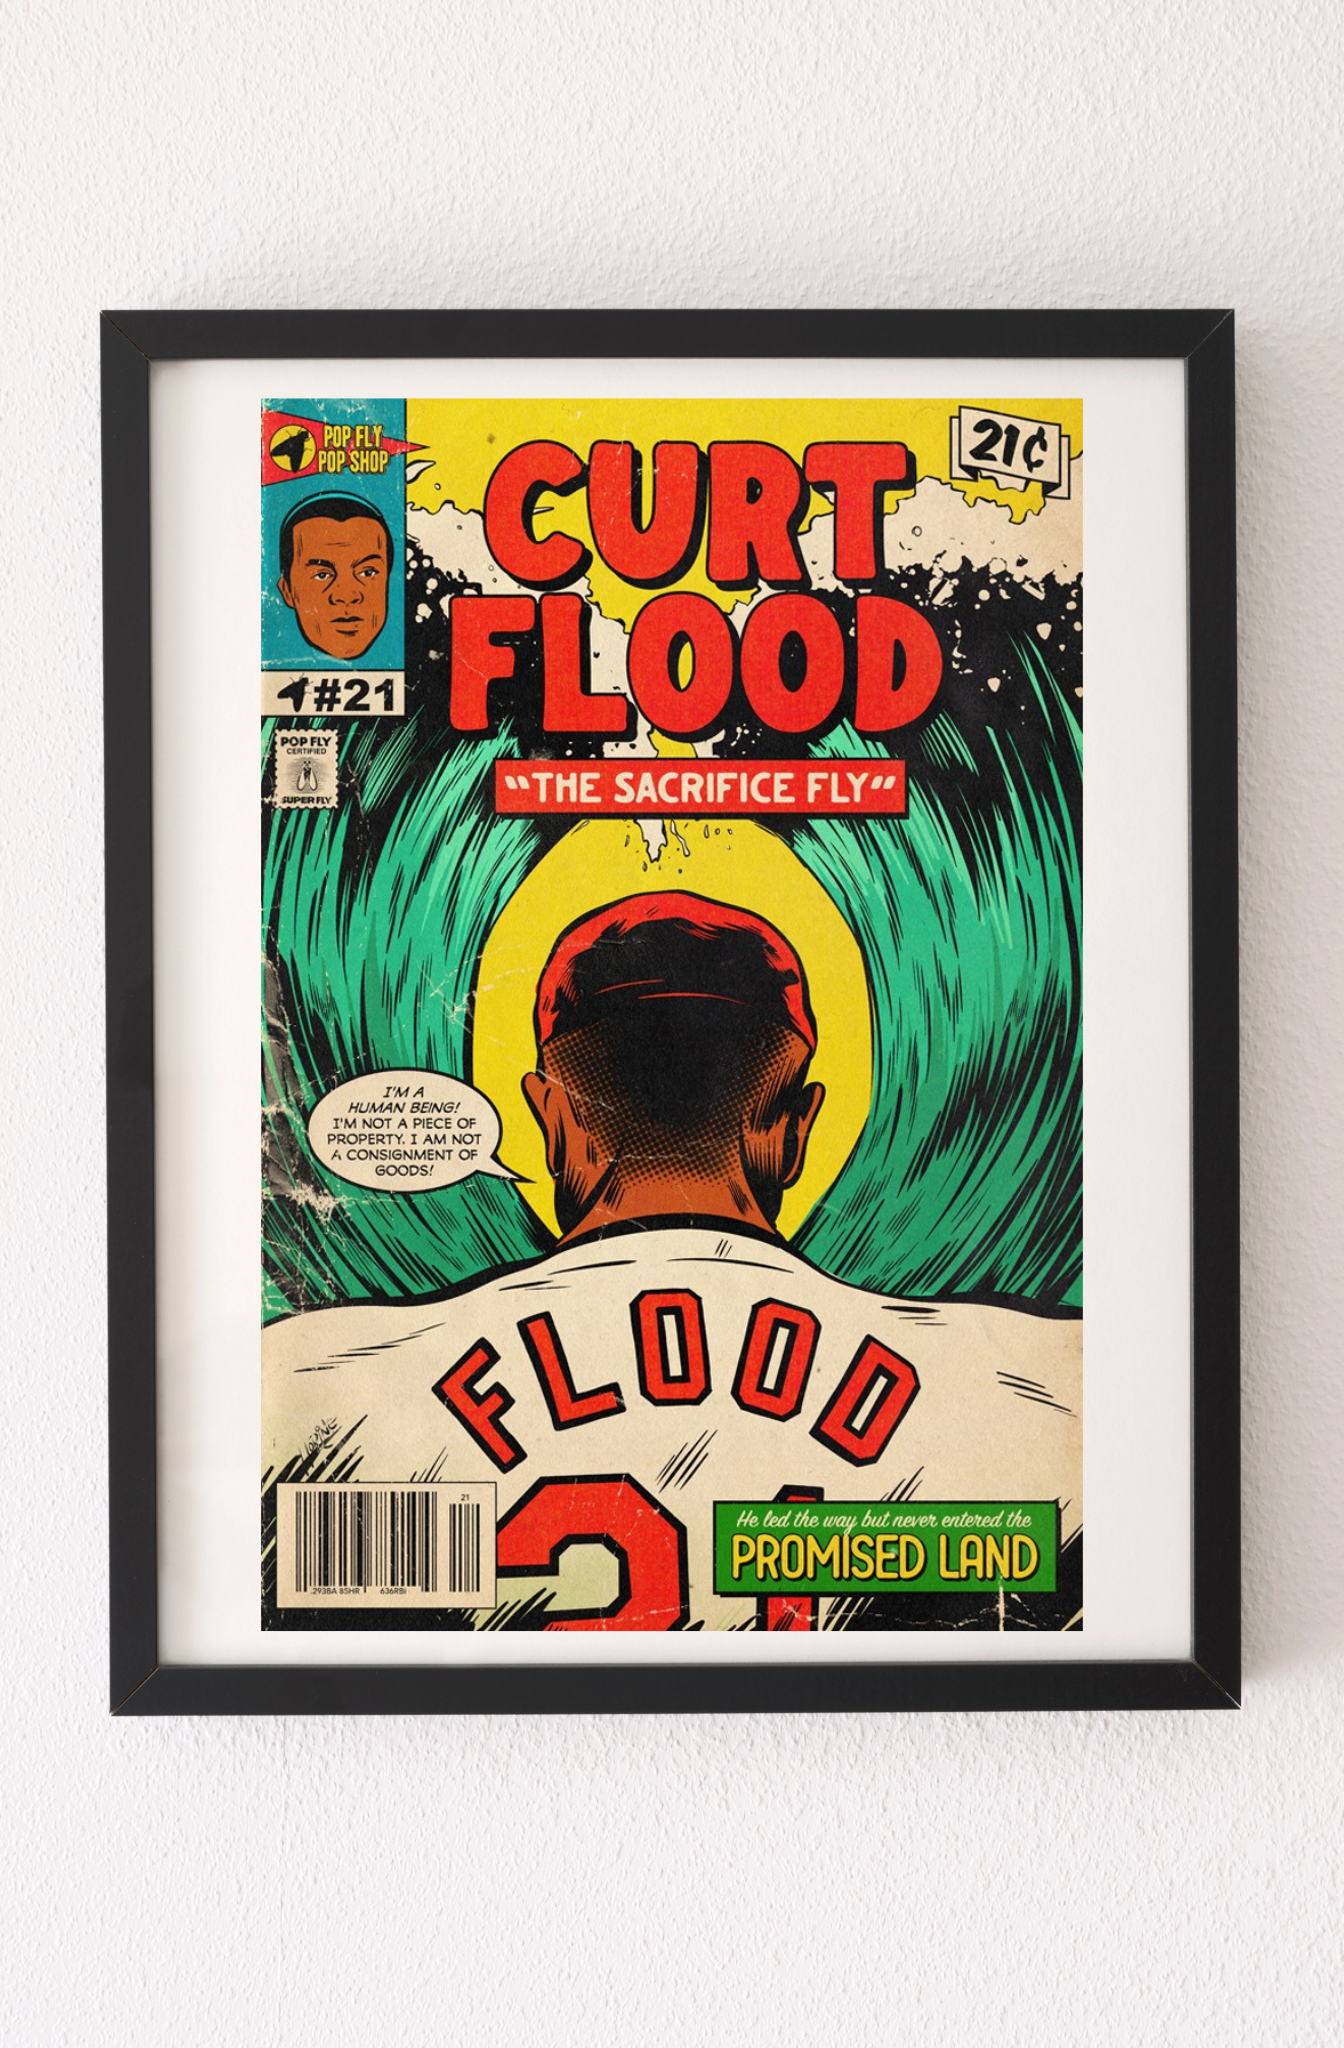 105. "Curt Flood" 7" x 10.5" Art Print